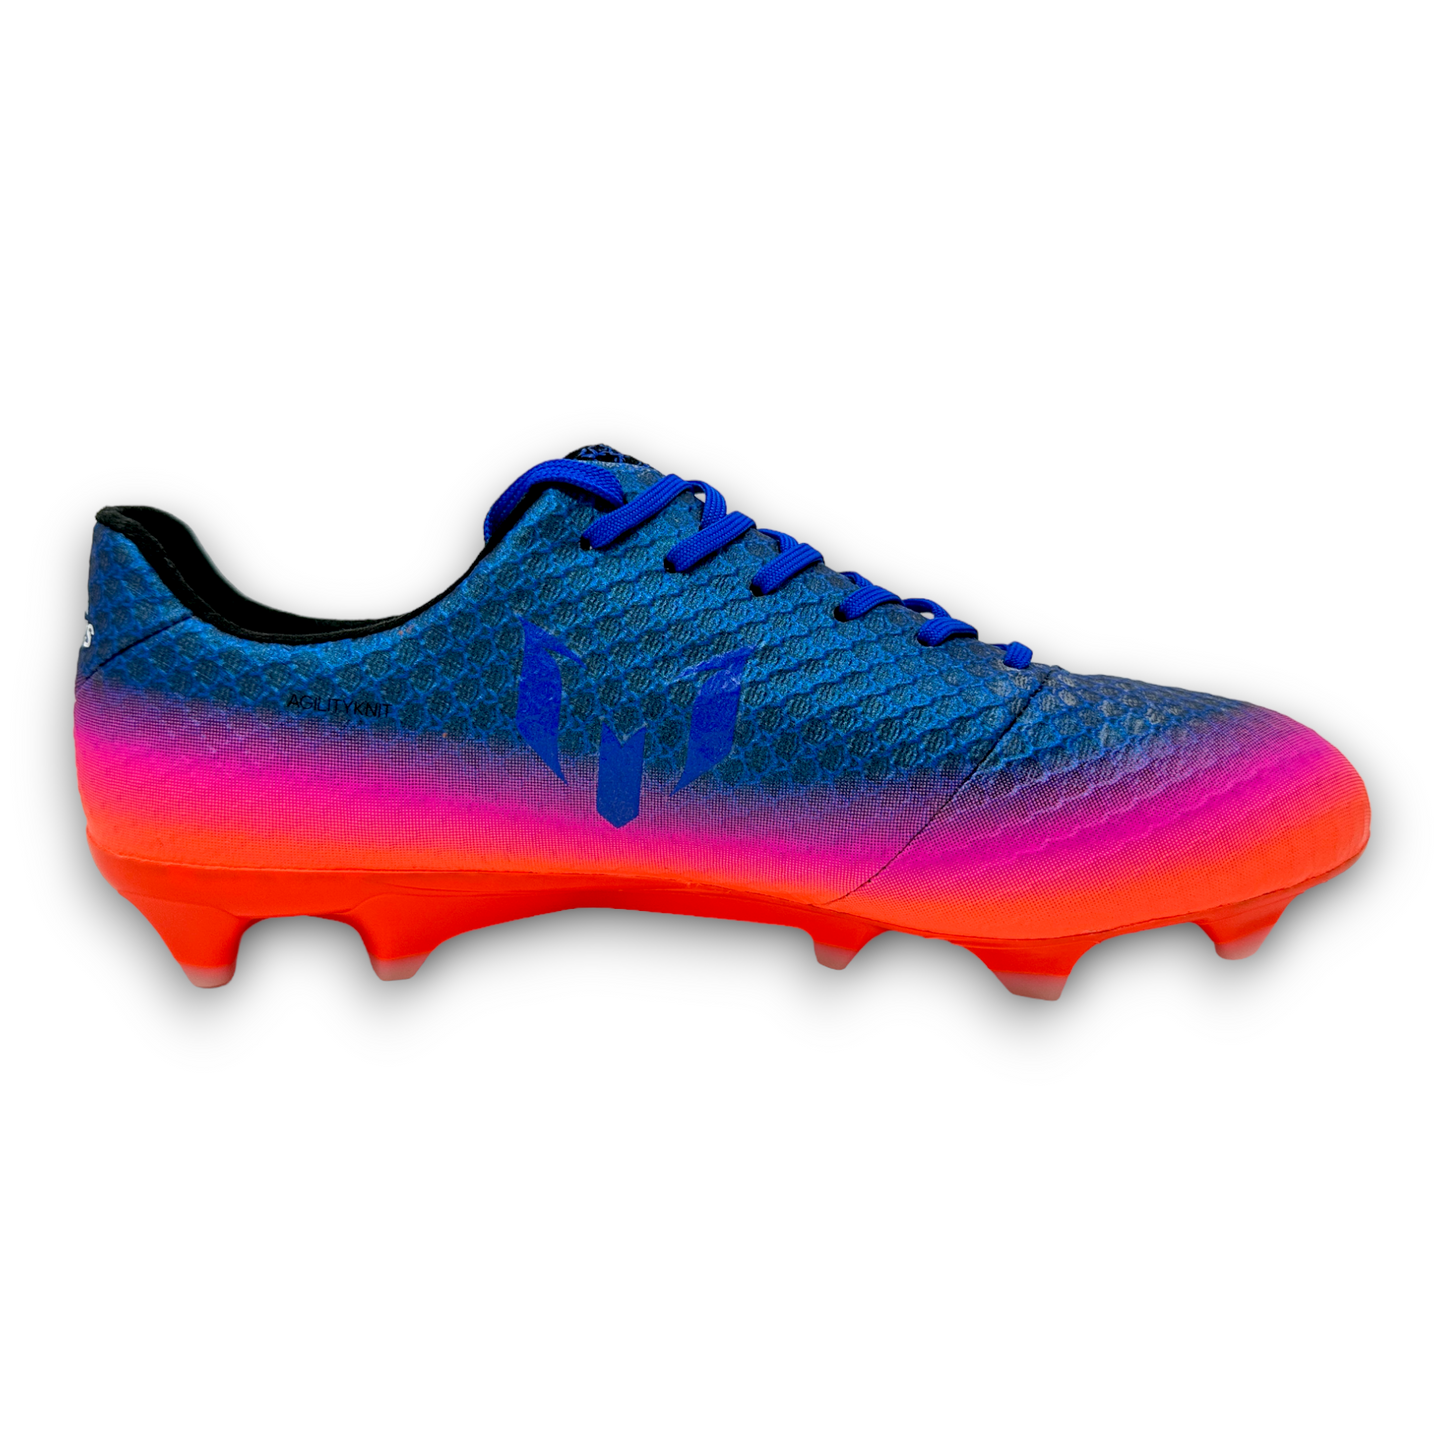 Adidas X 16.1 FG “Messi Pack”